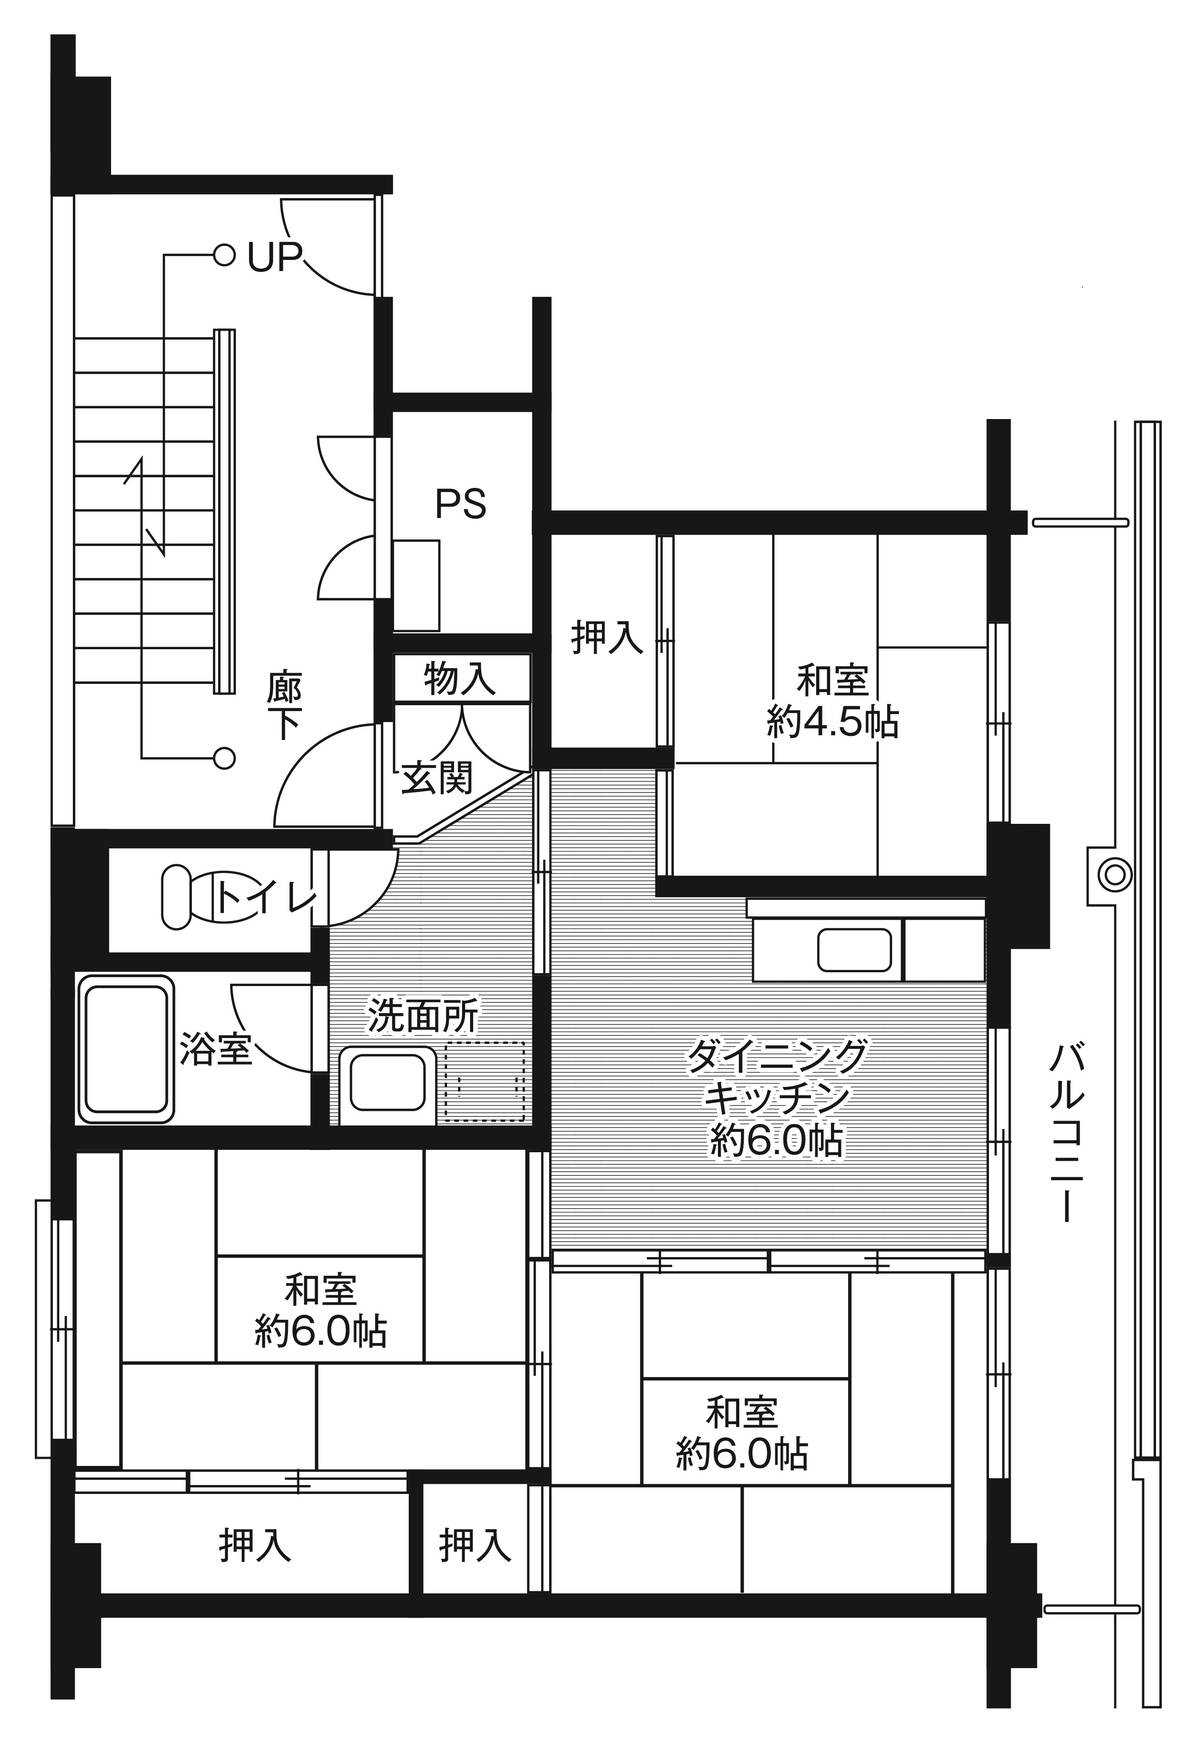 3DK floorplan of Village House Sanno in Tenryu-ku